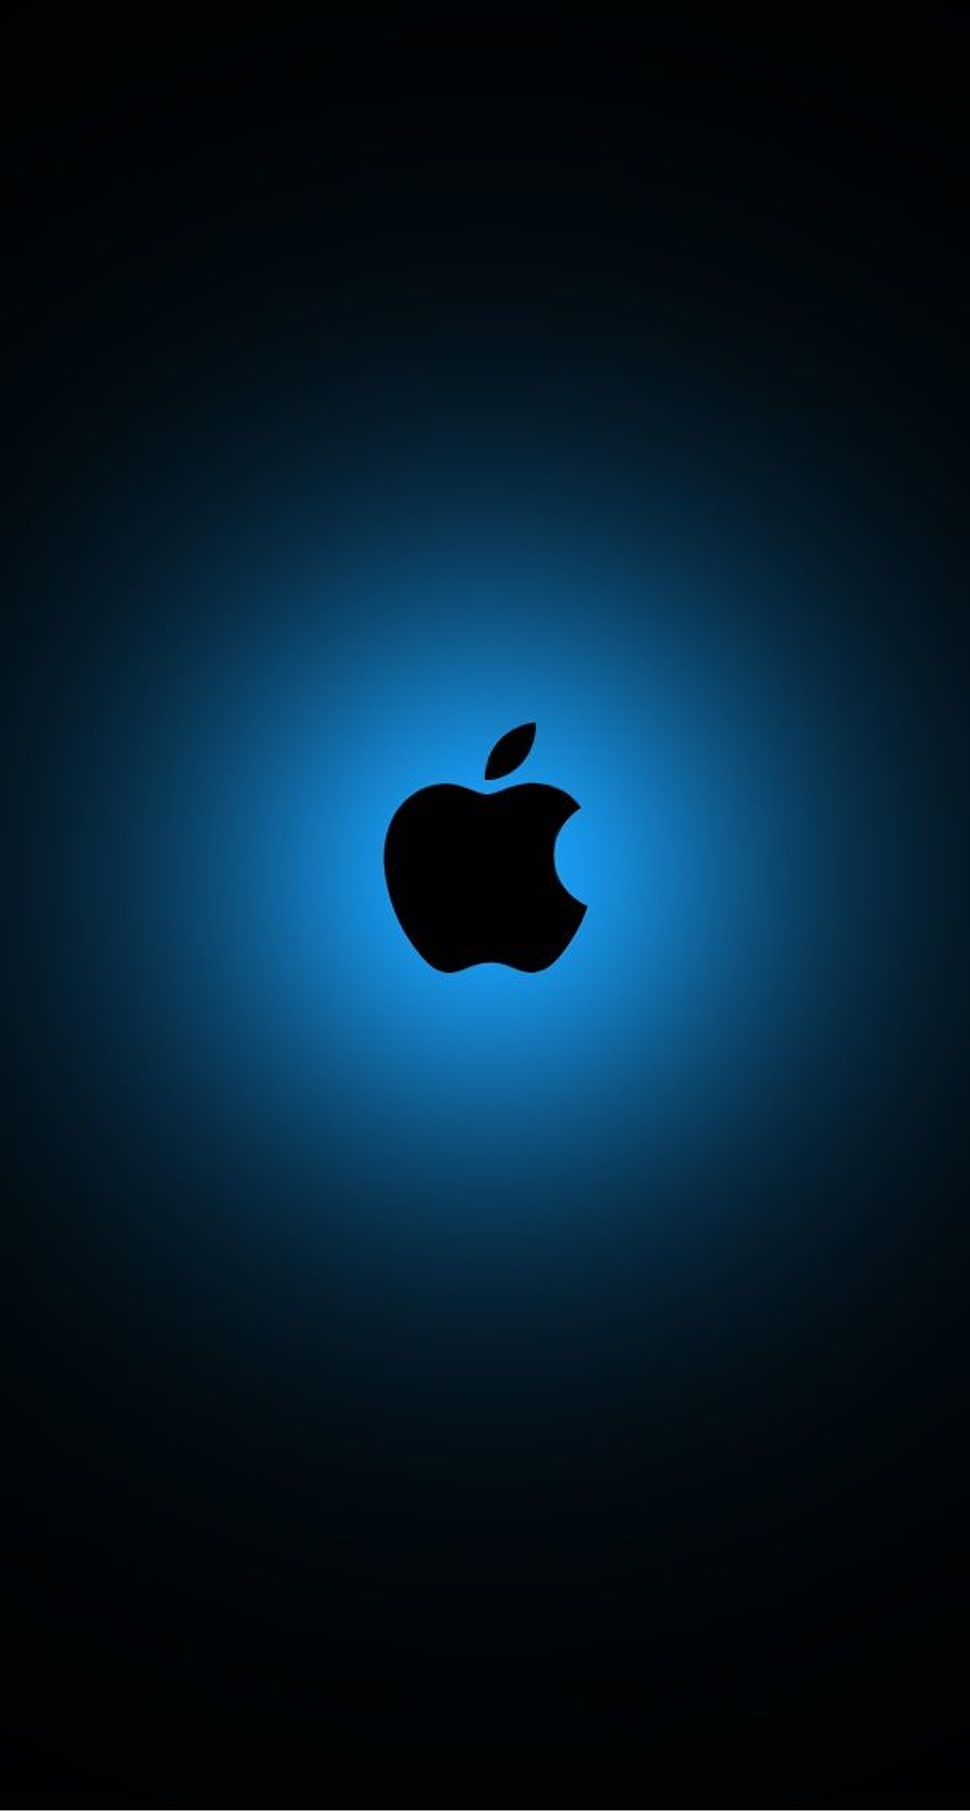 blue apple logo wallpaper iphone 5